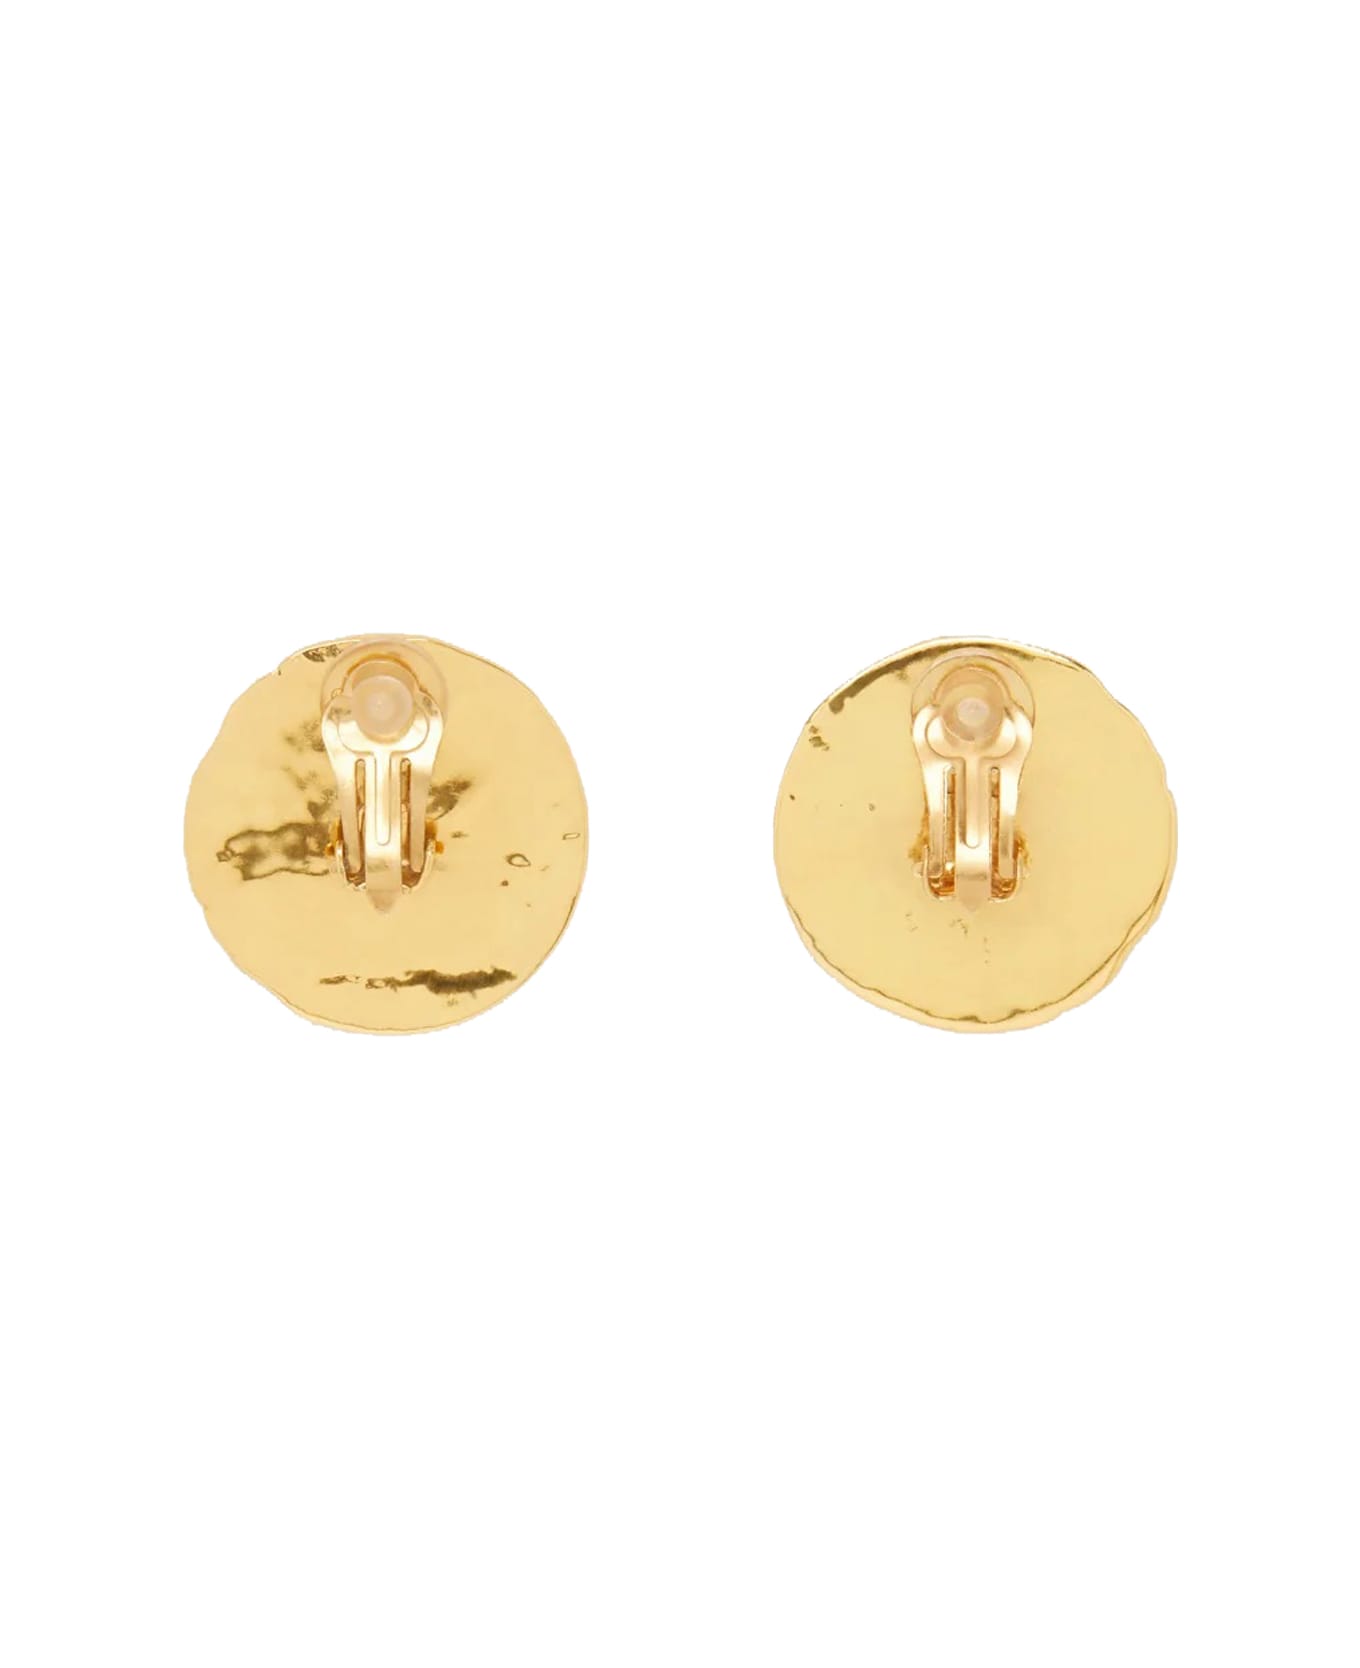 Patou Earrings - Golden